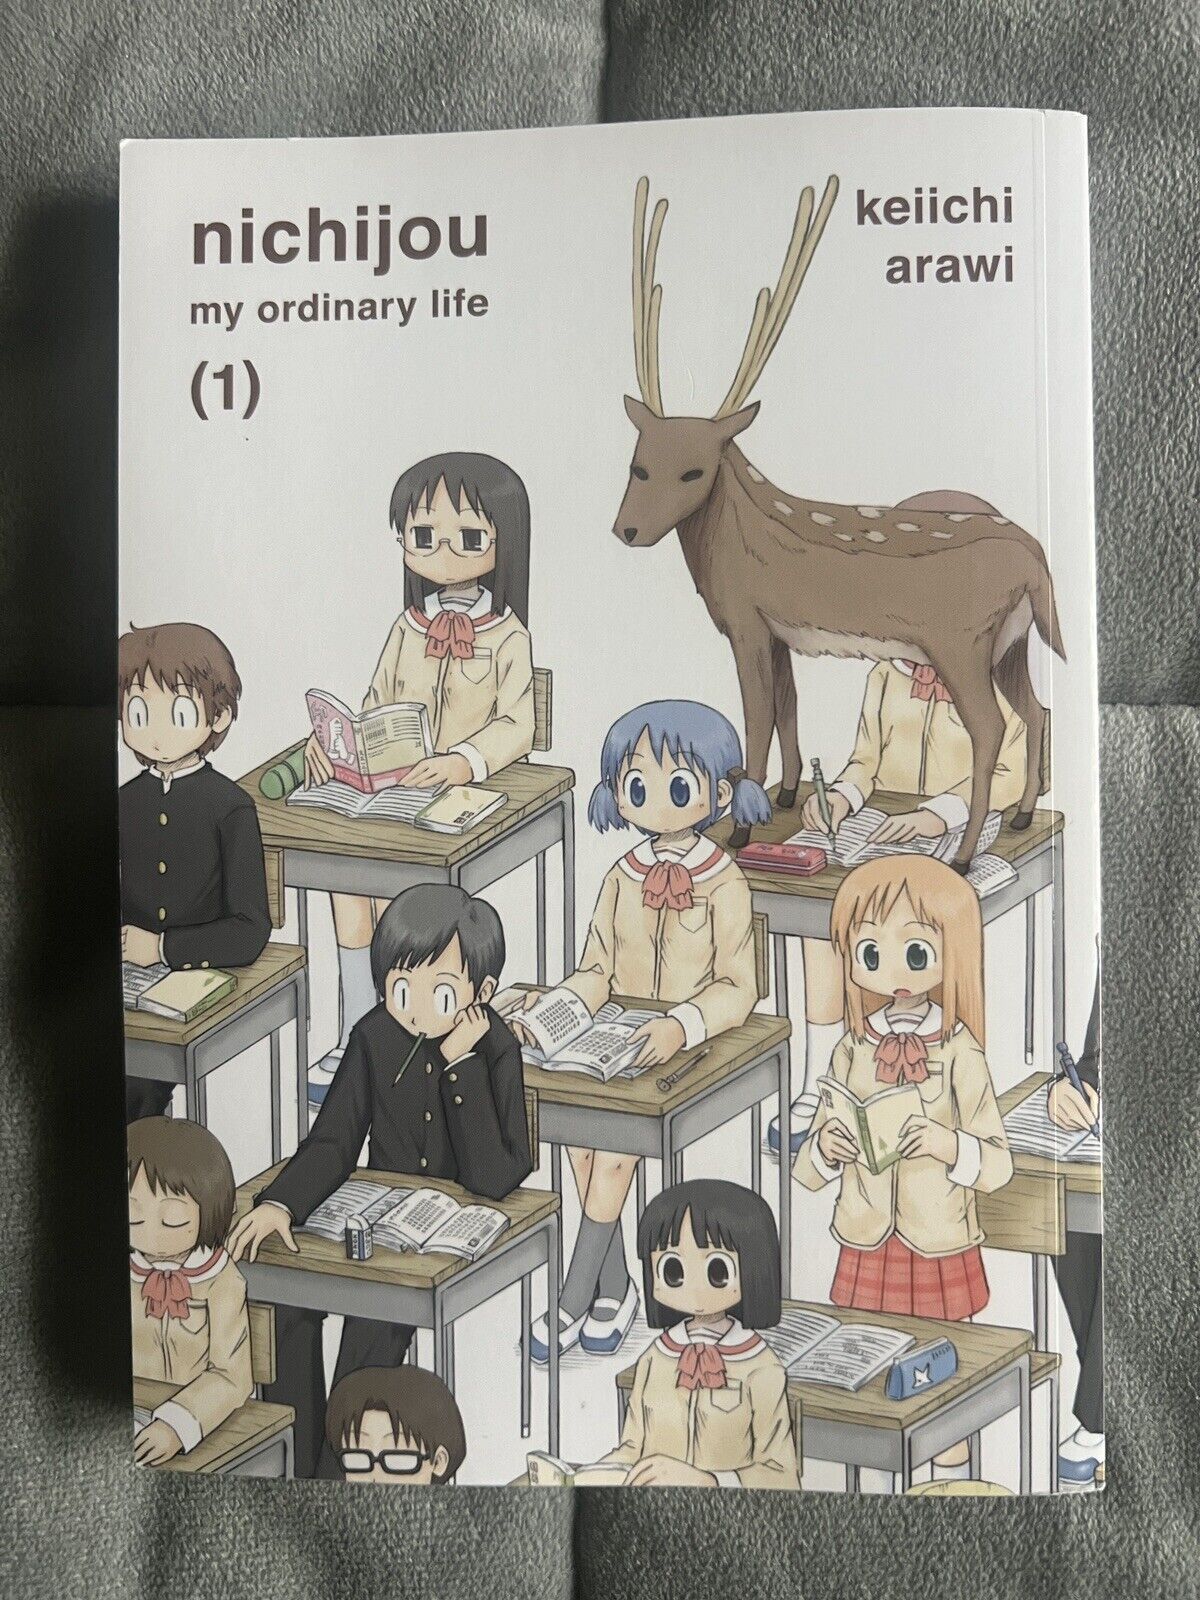 Nichijou My Ordinary Life Volume 1 (1) By Keiichi Arawi Manga English Vertical